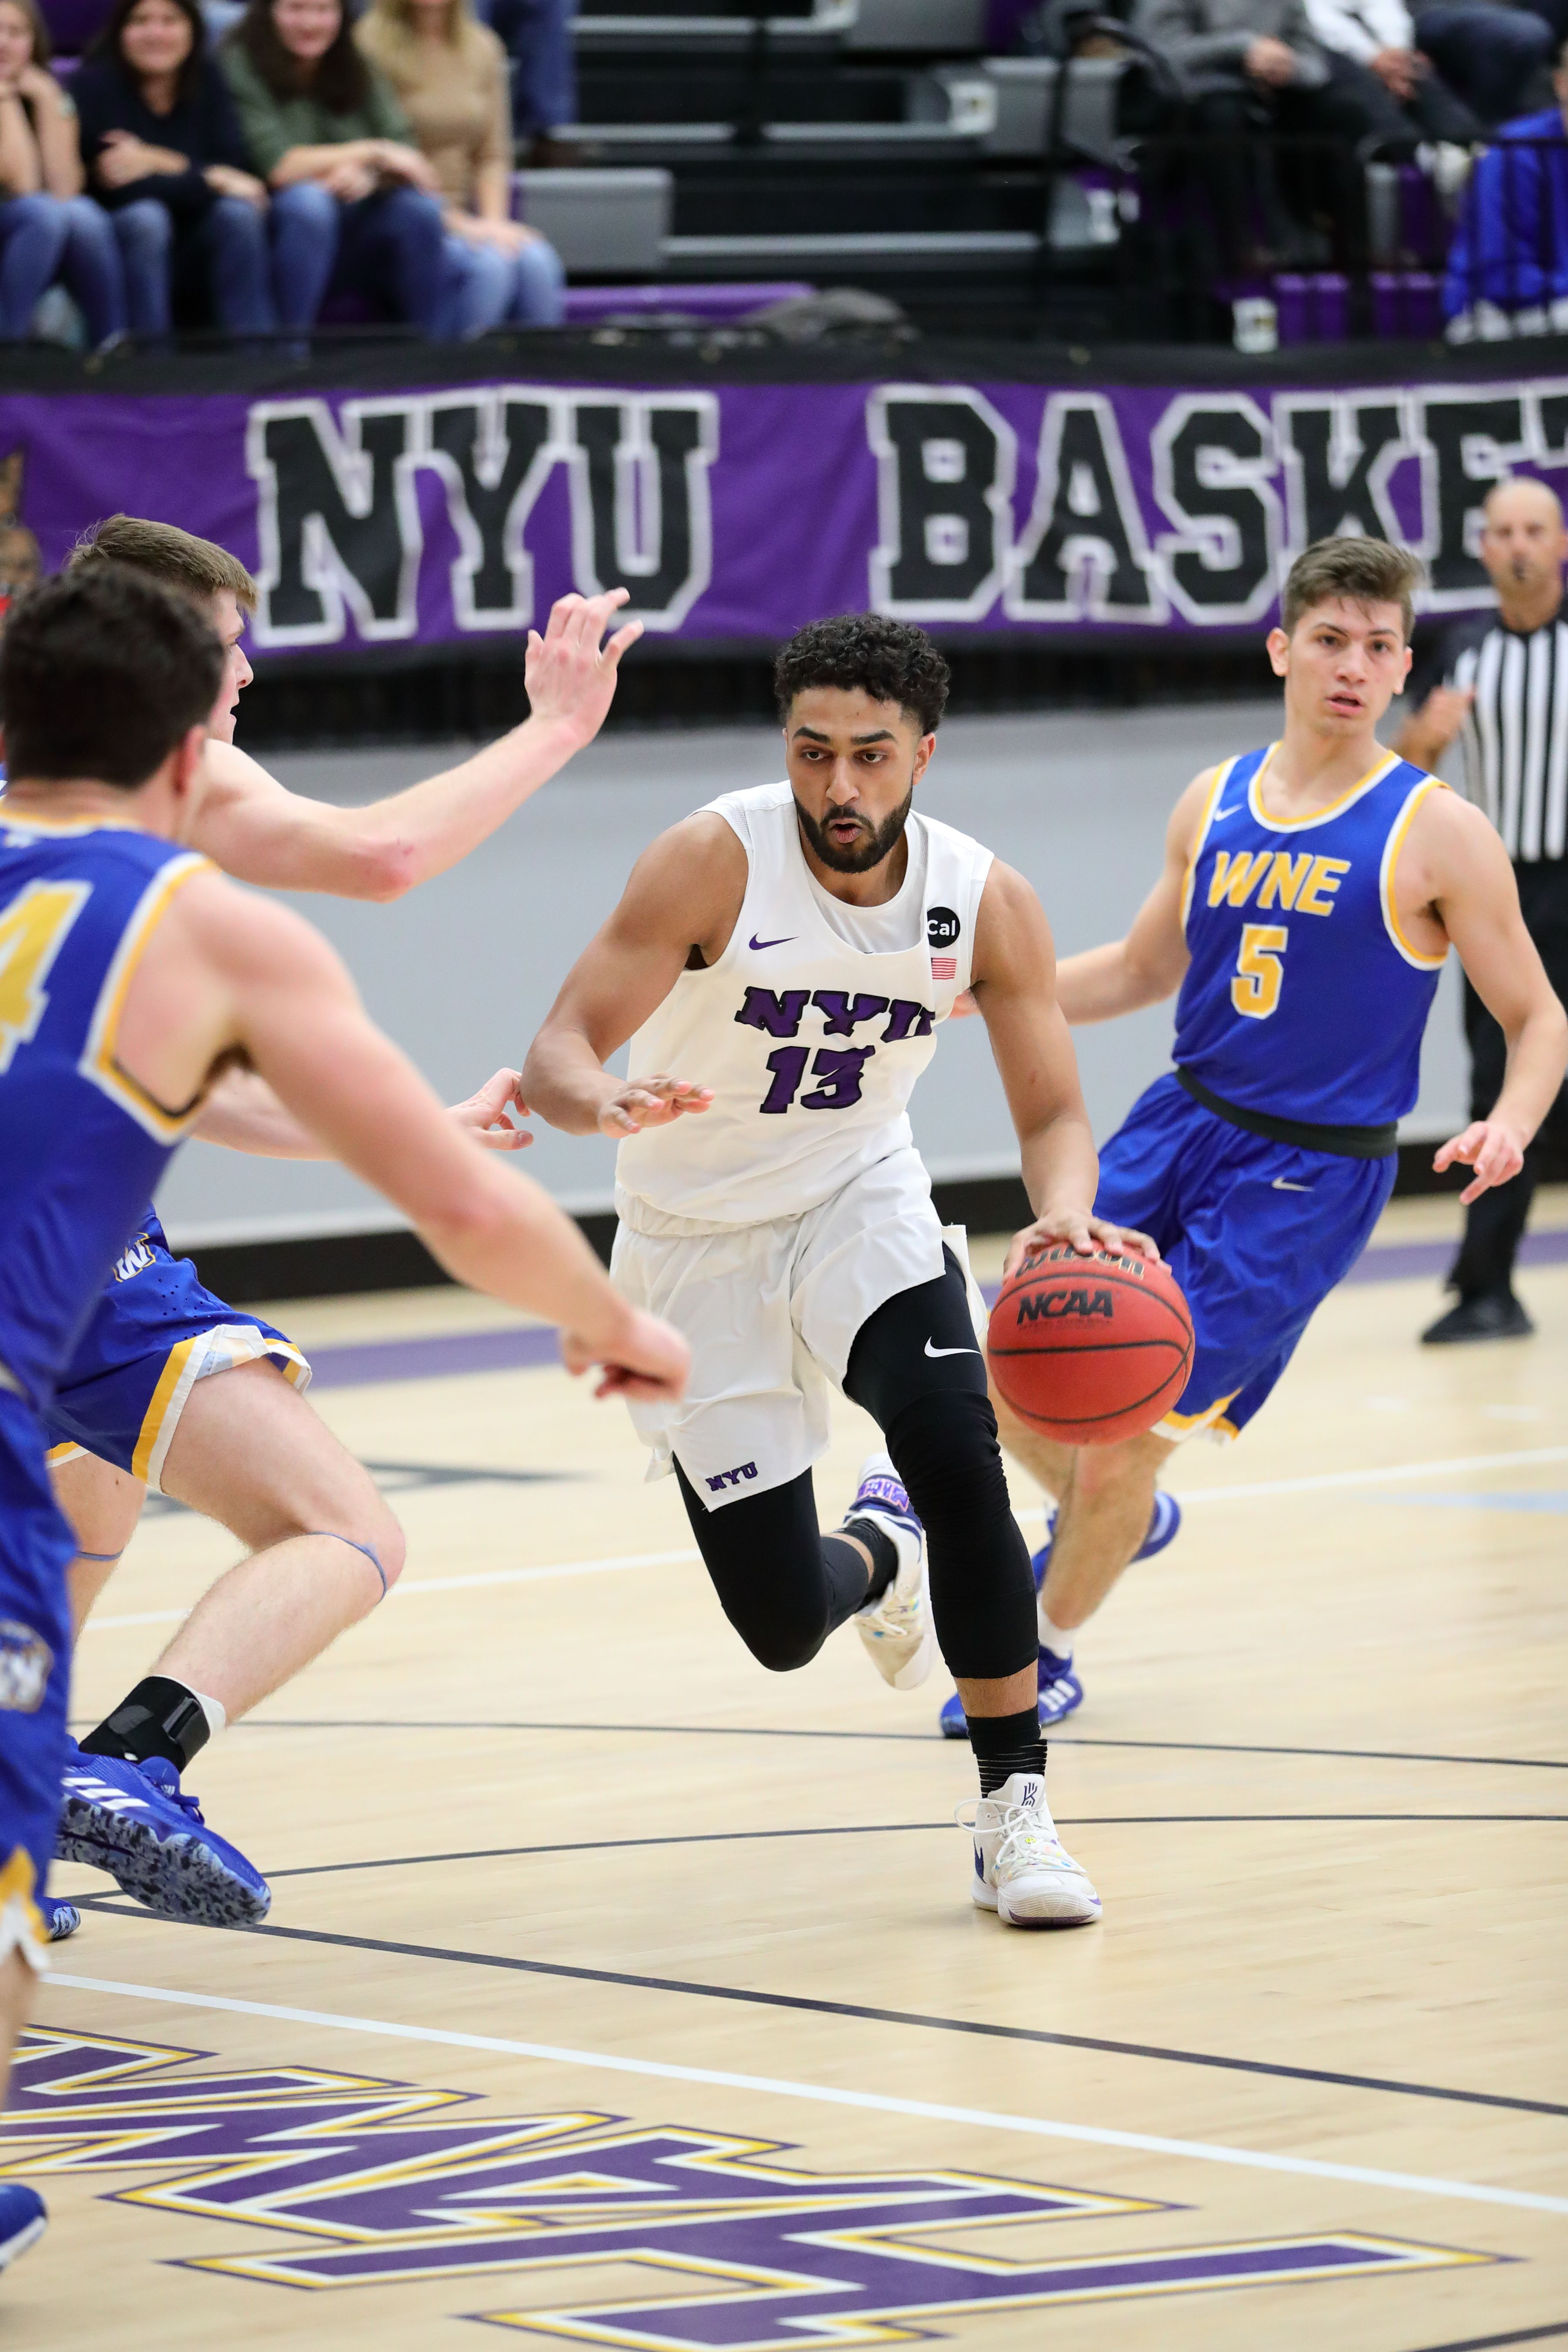 NYU men's basketball player dribbles the ball down the court